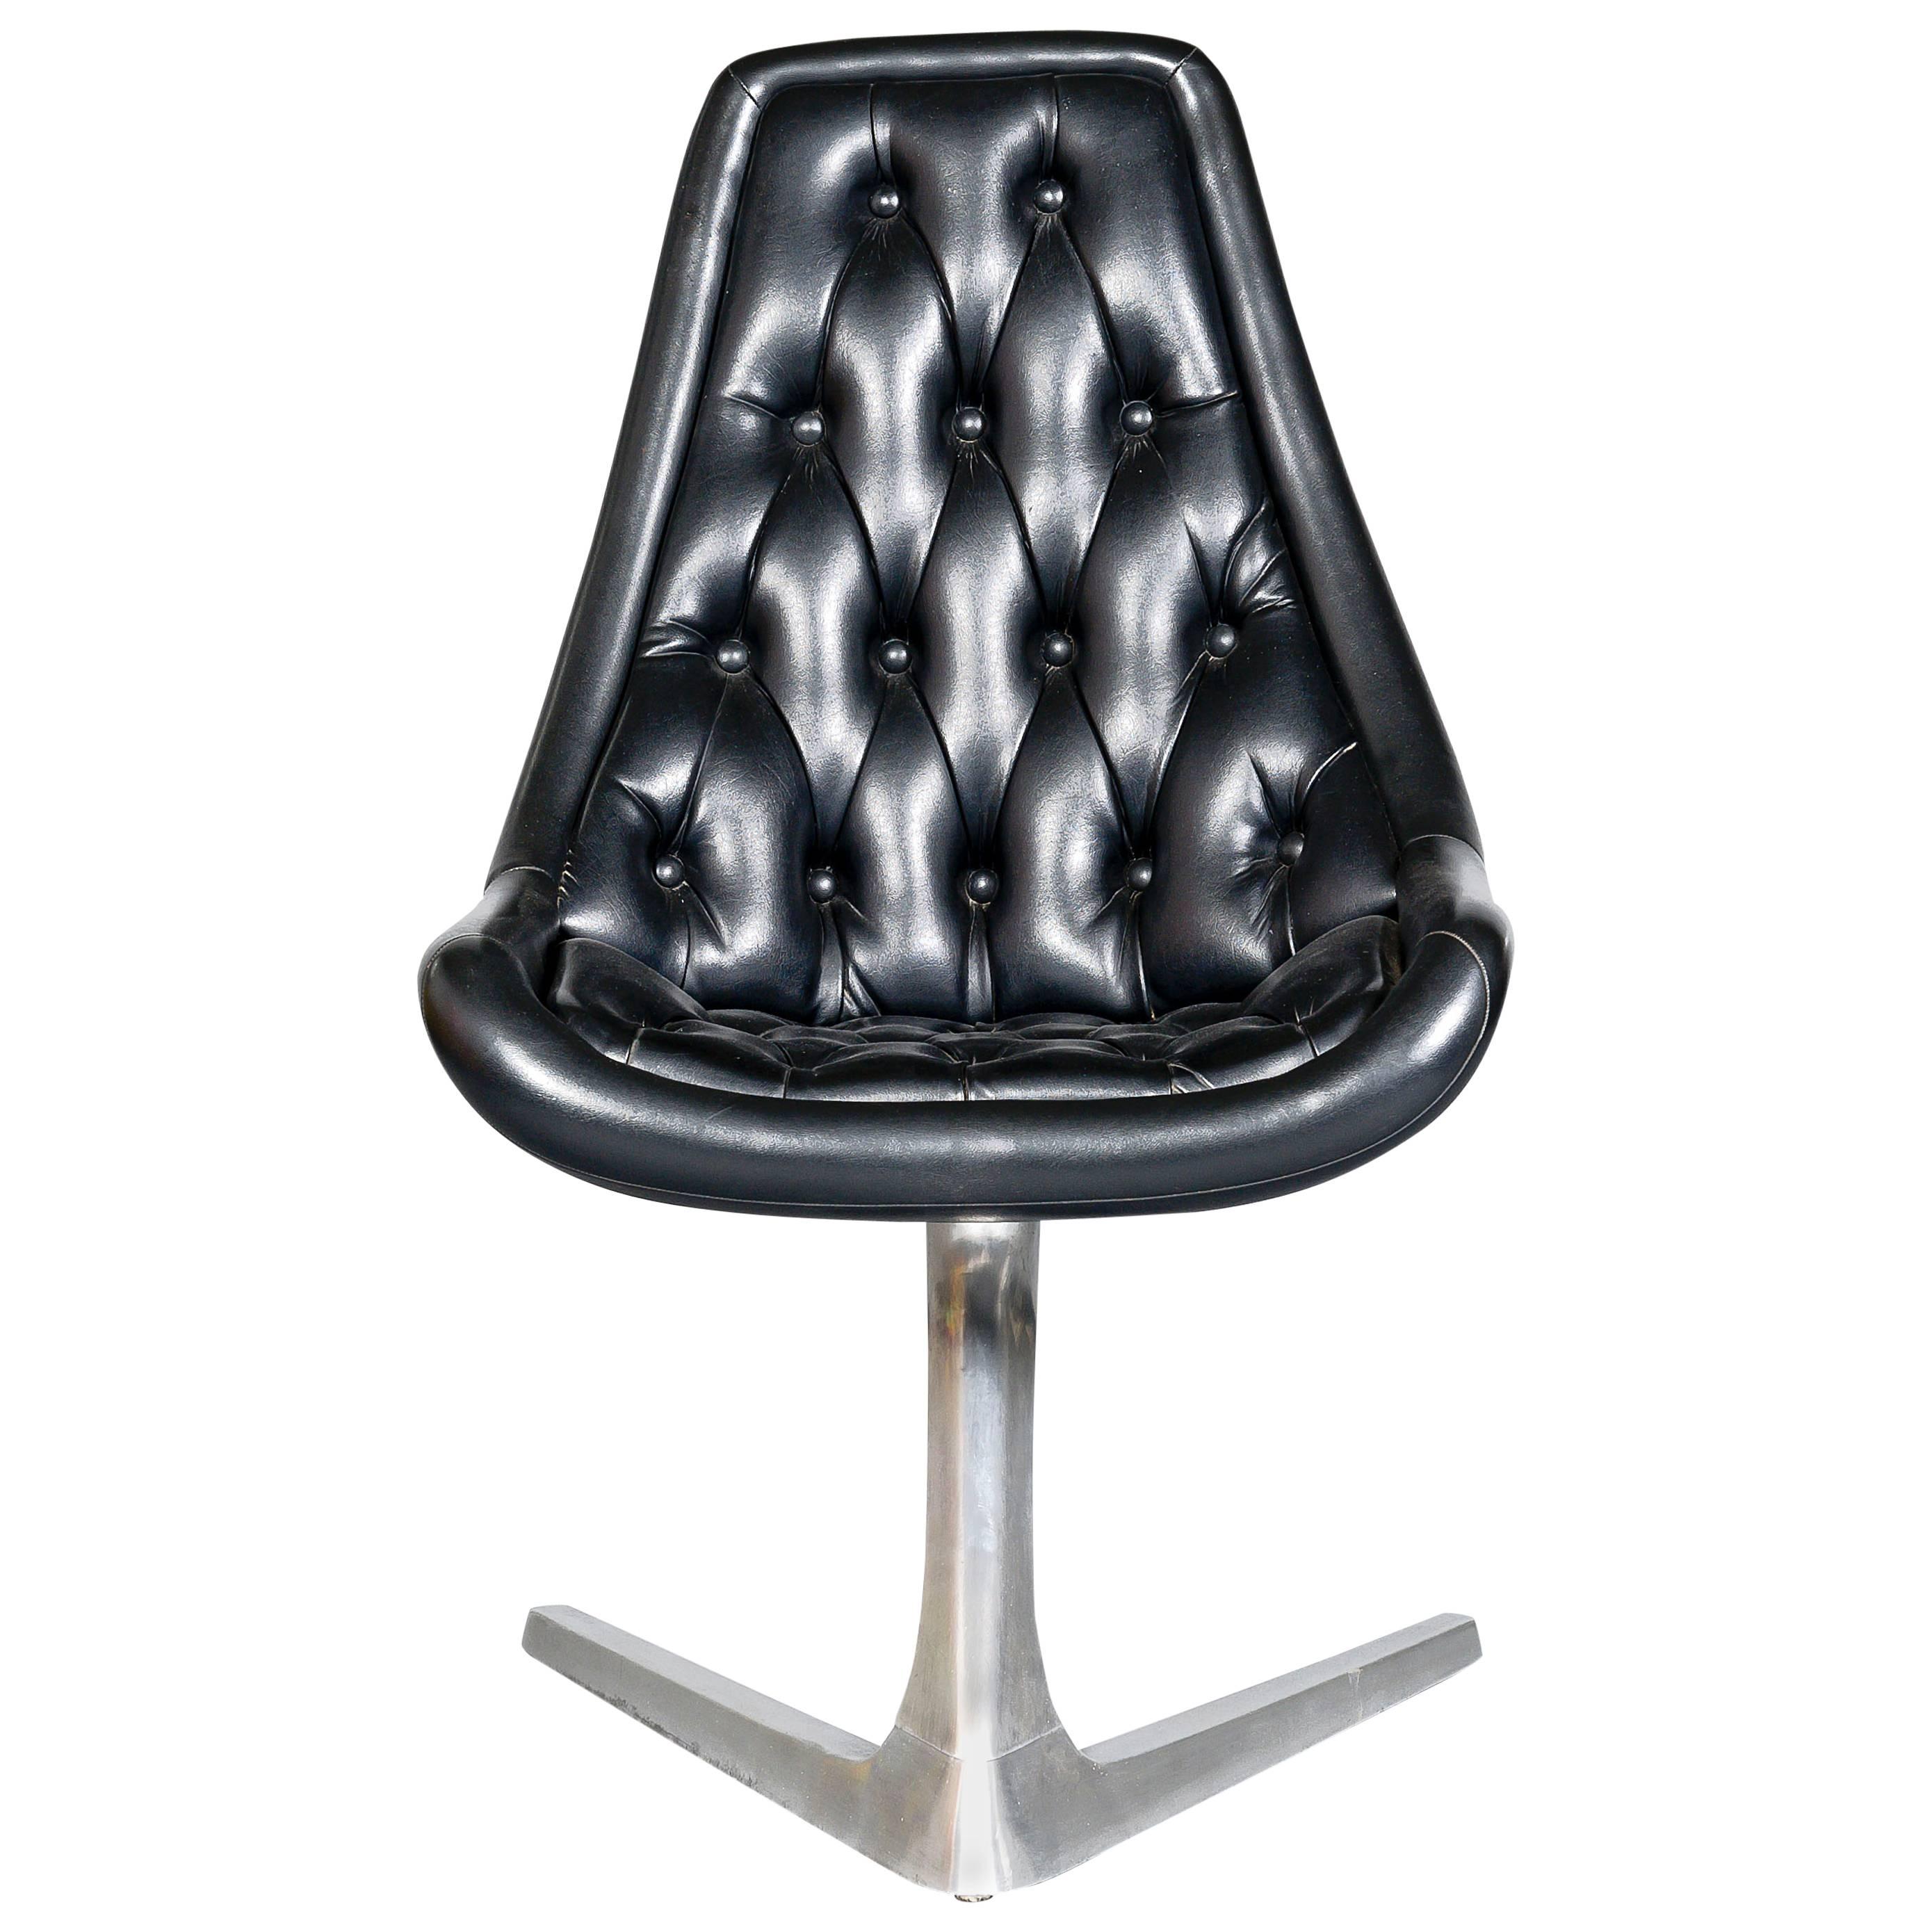 Aluminium Chromcraft 'Sculpta' Stuhl aus den 1960er Jahren, neu gepolstert mit schwarzem Leder